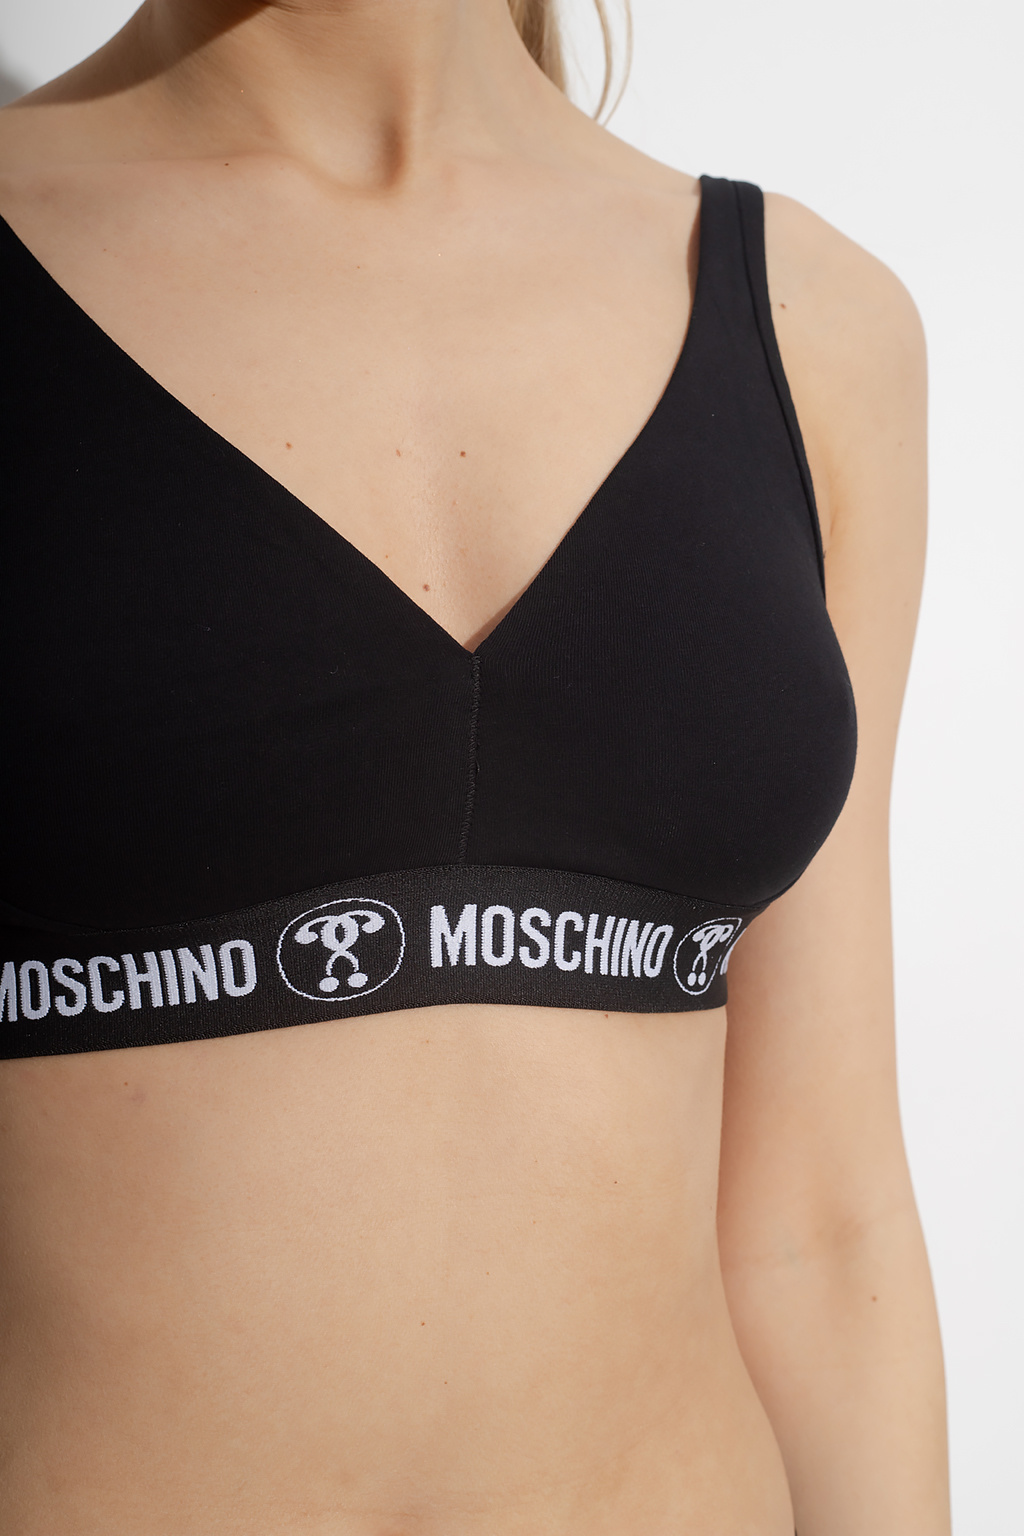 Moschino Cotton bra, Women's Clothing